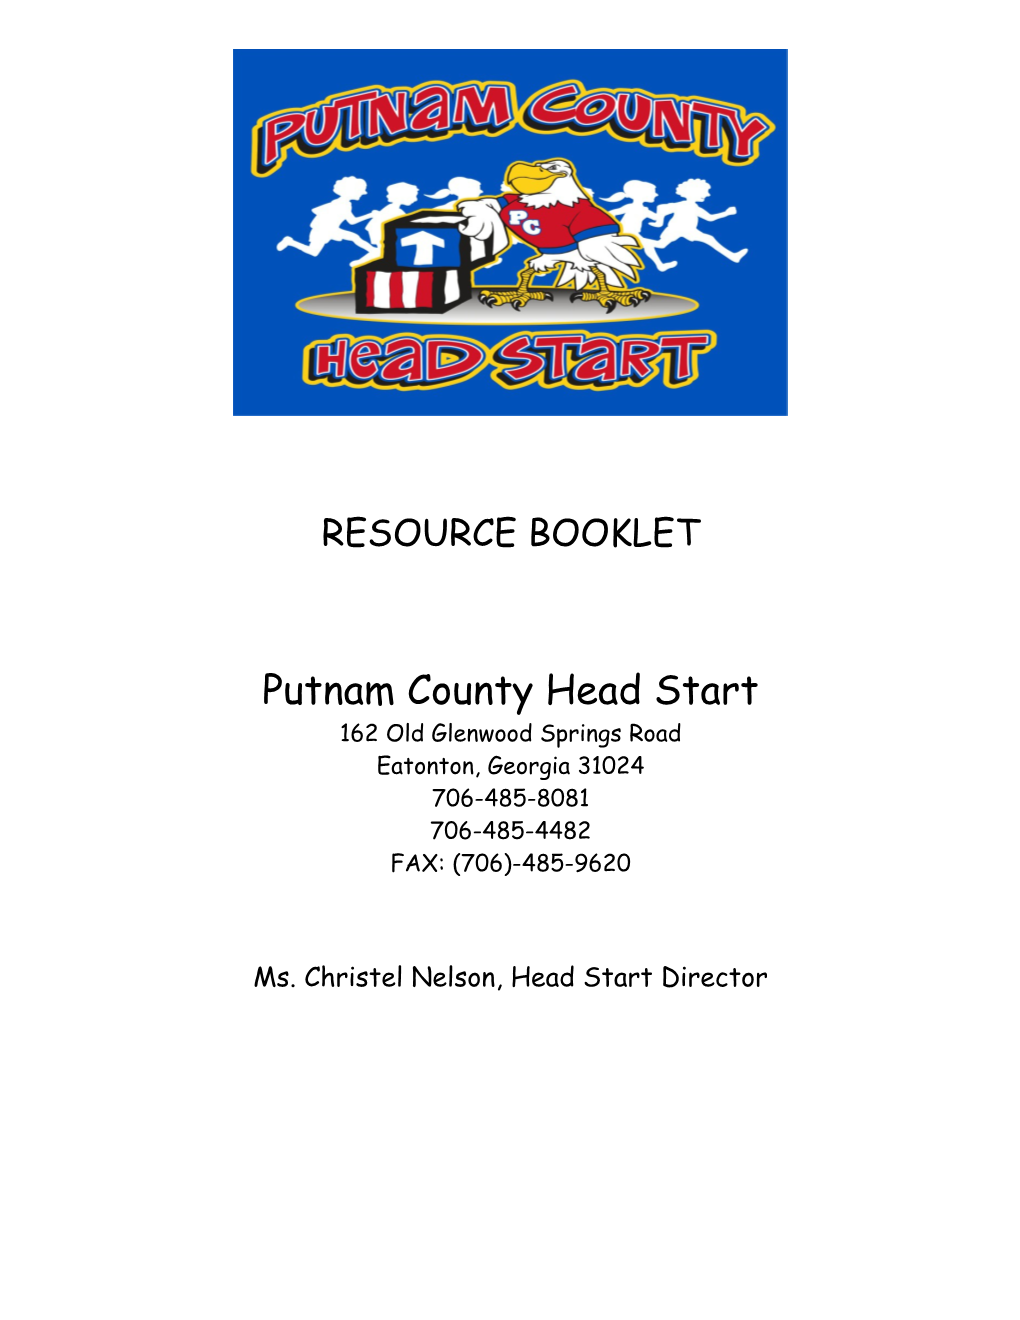 Putnam County Head Start